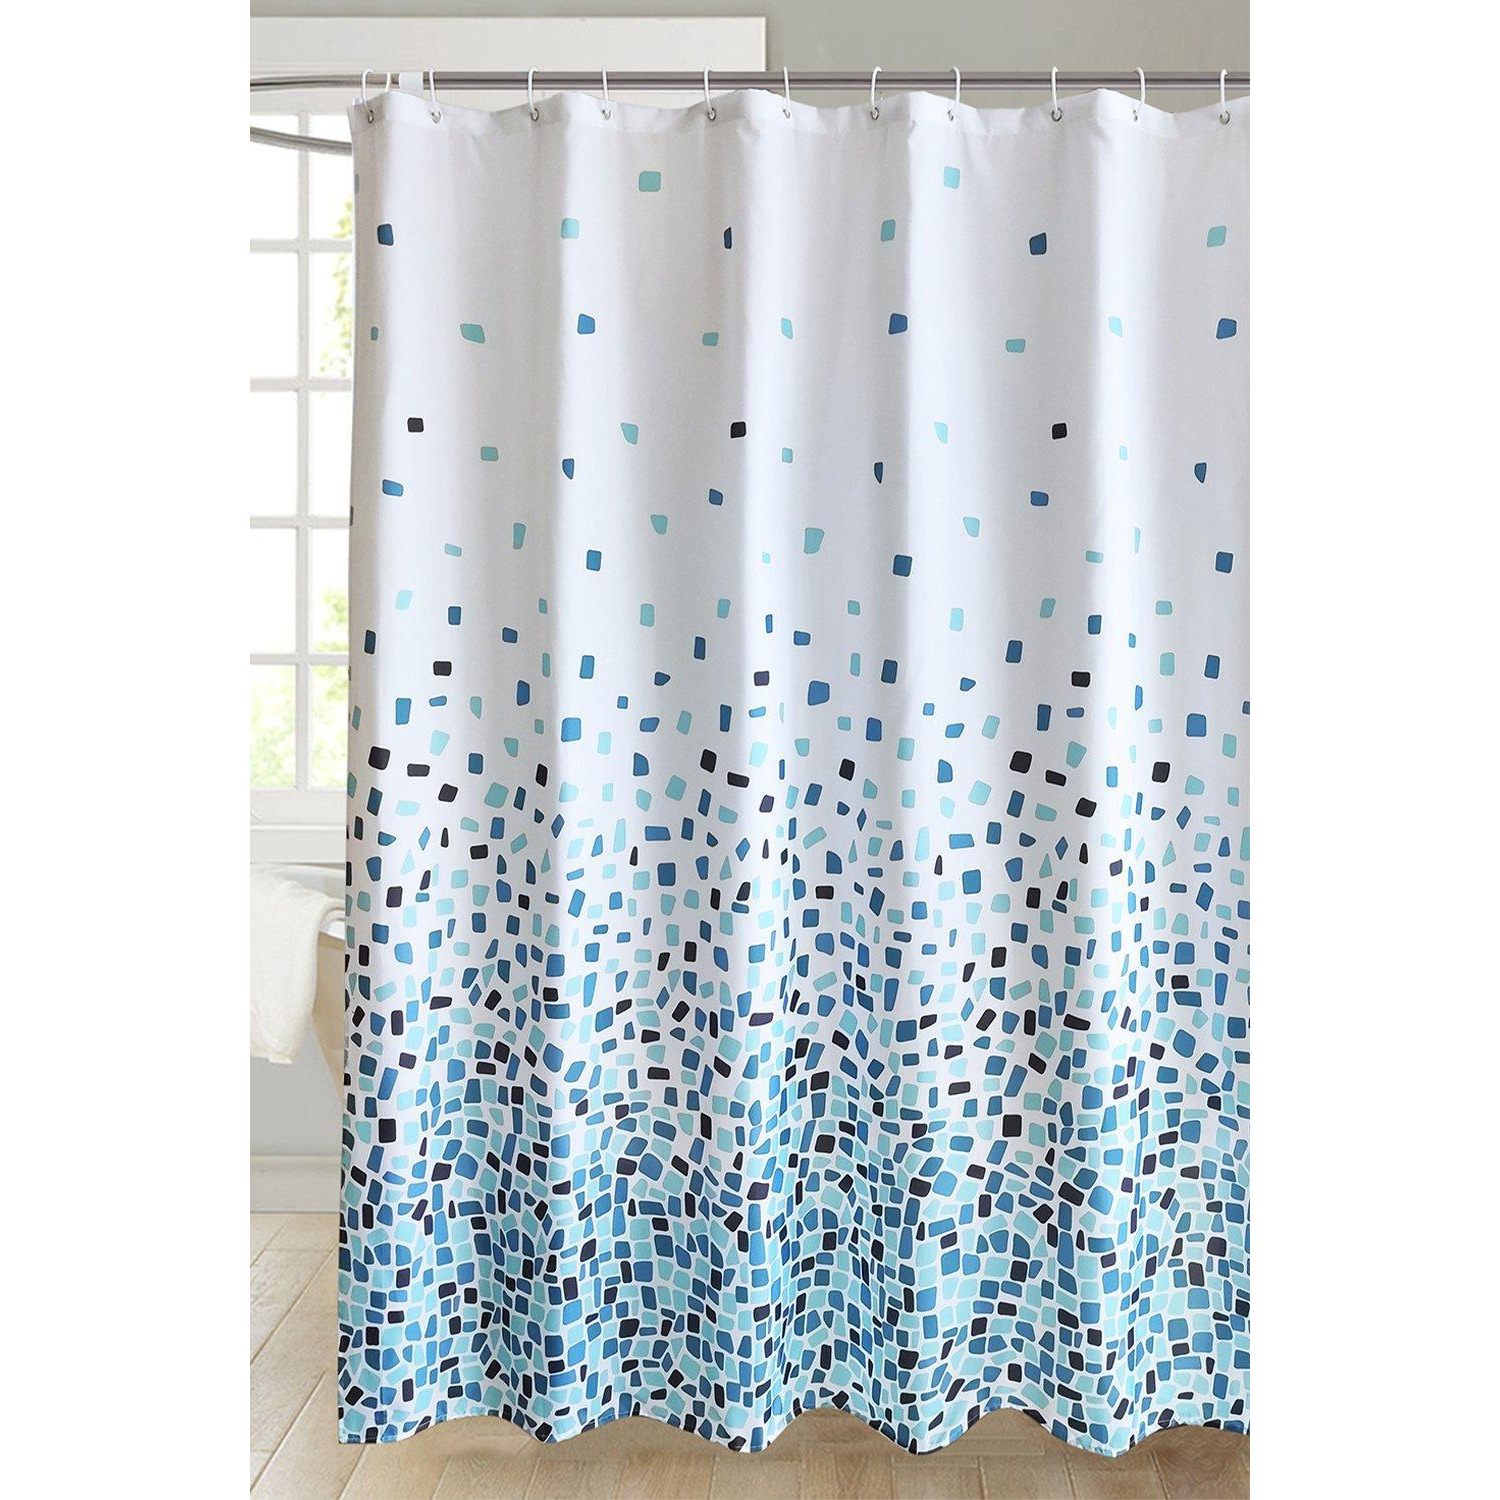 Blue Mosaic Polyester Shower Curtain - 180cm x 200cm - image 1